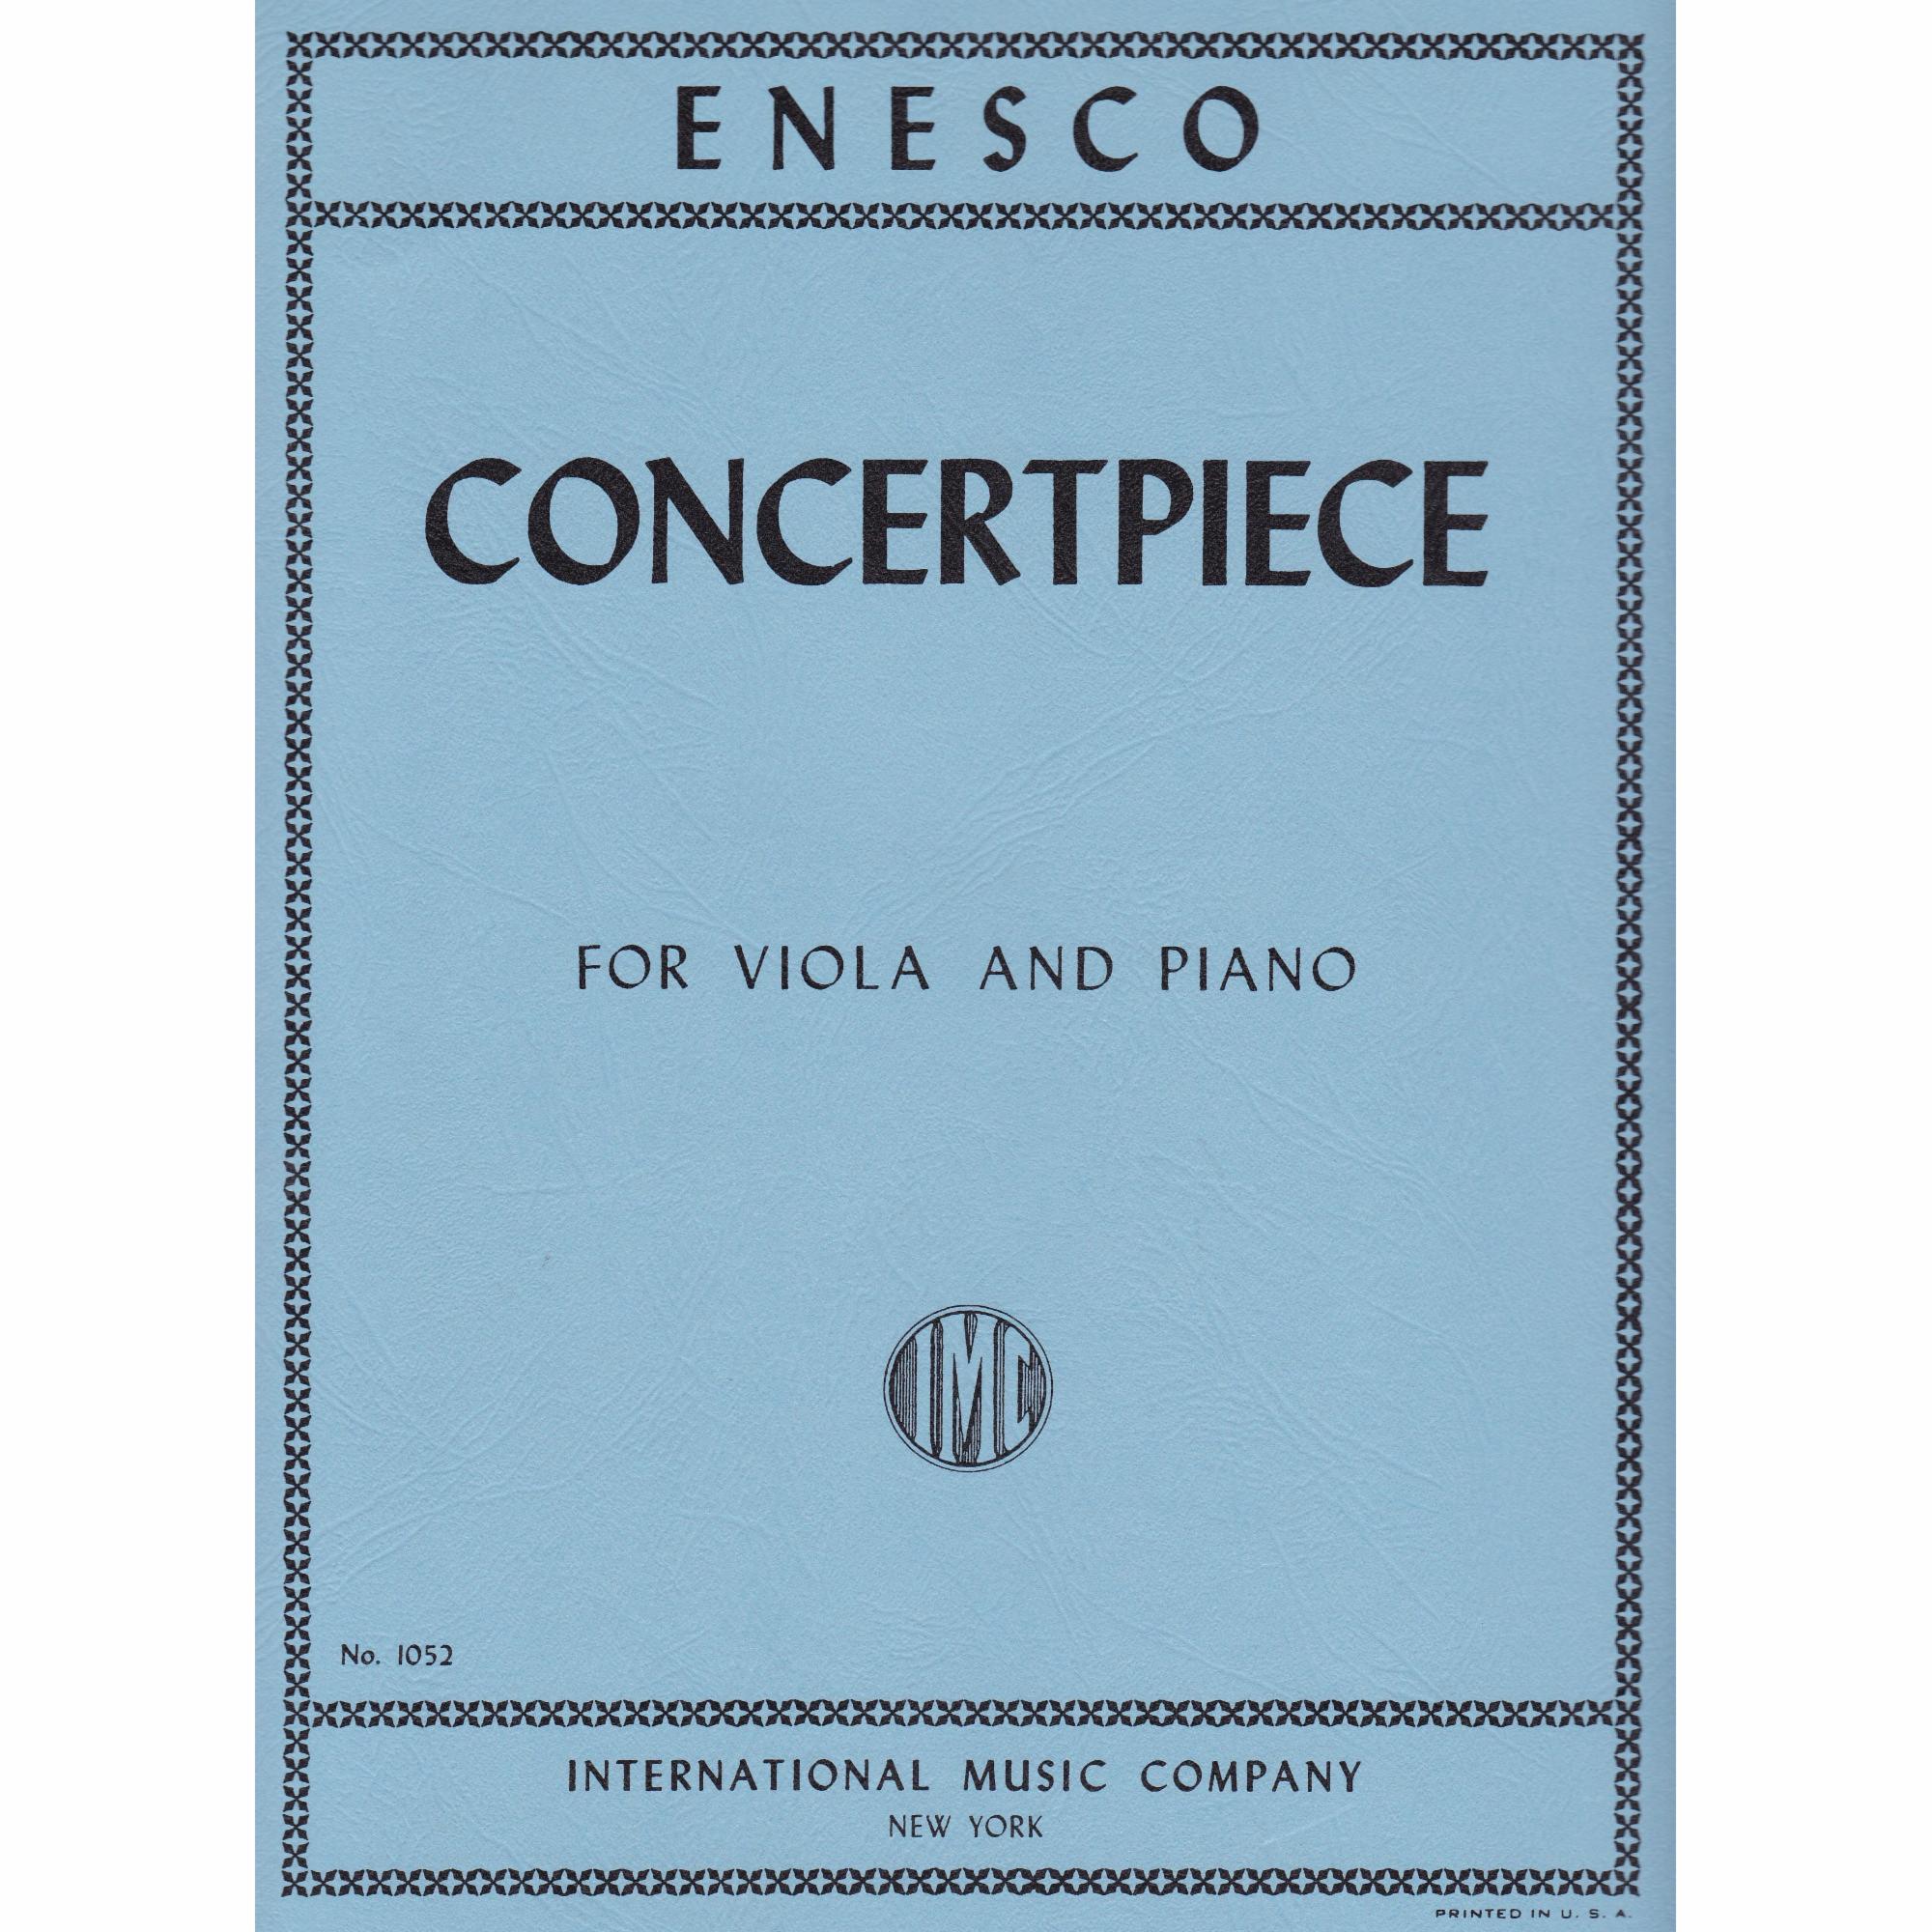 Concertpiece for Viola and Piano